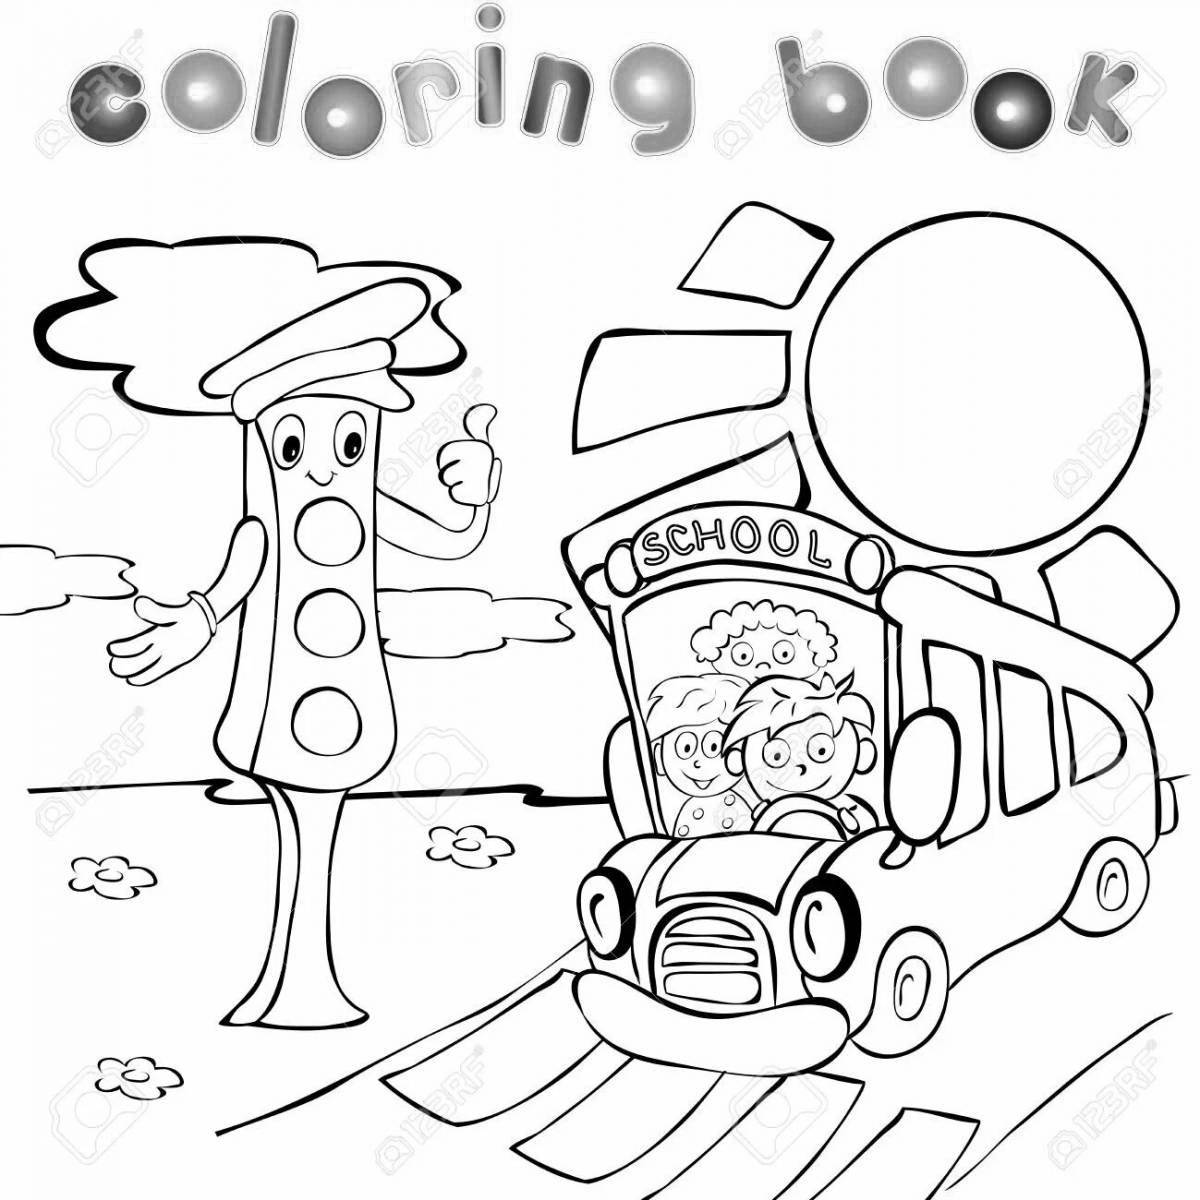 Adorable car coloring page